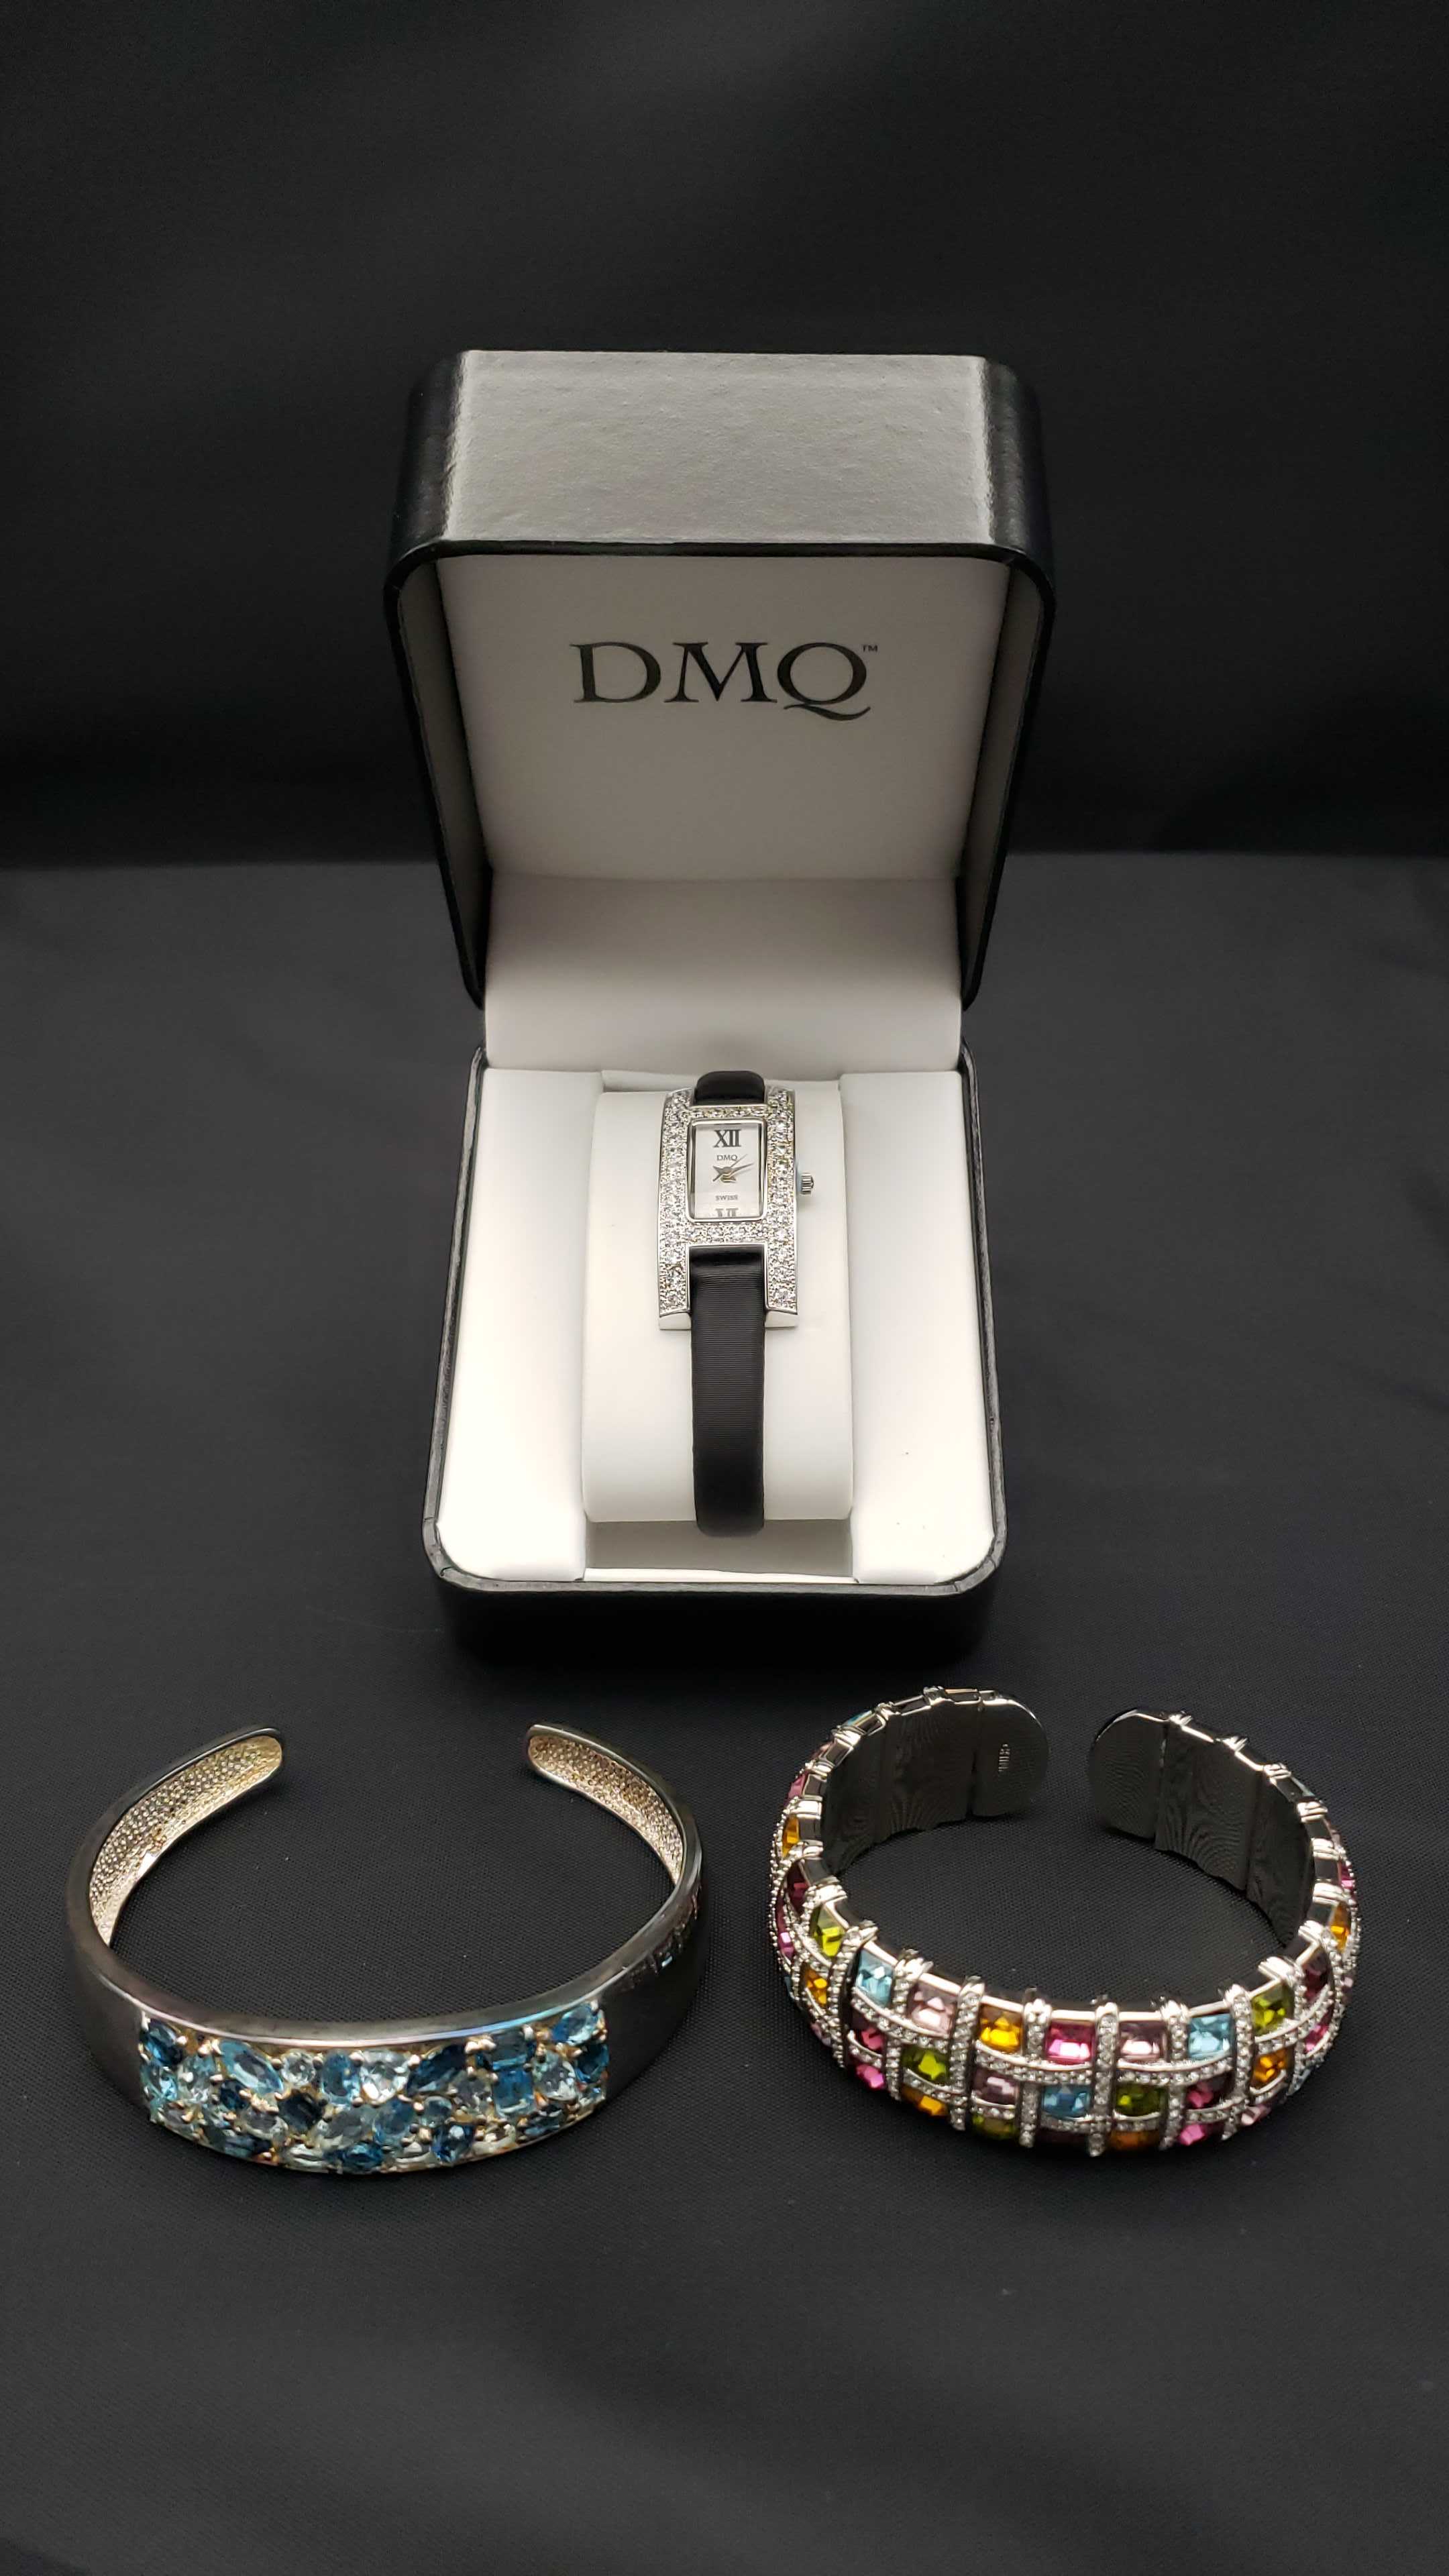 Sold at Auction: Dmq Wrist Watch In Originlal Box